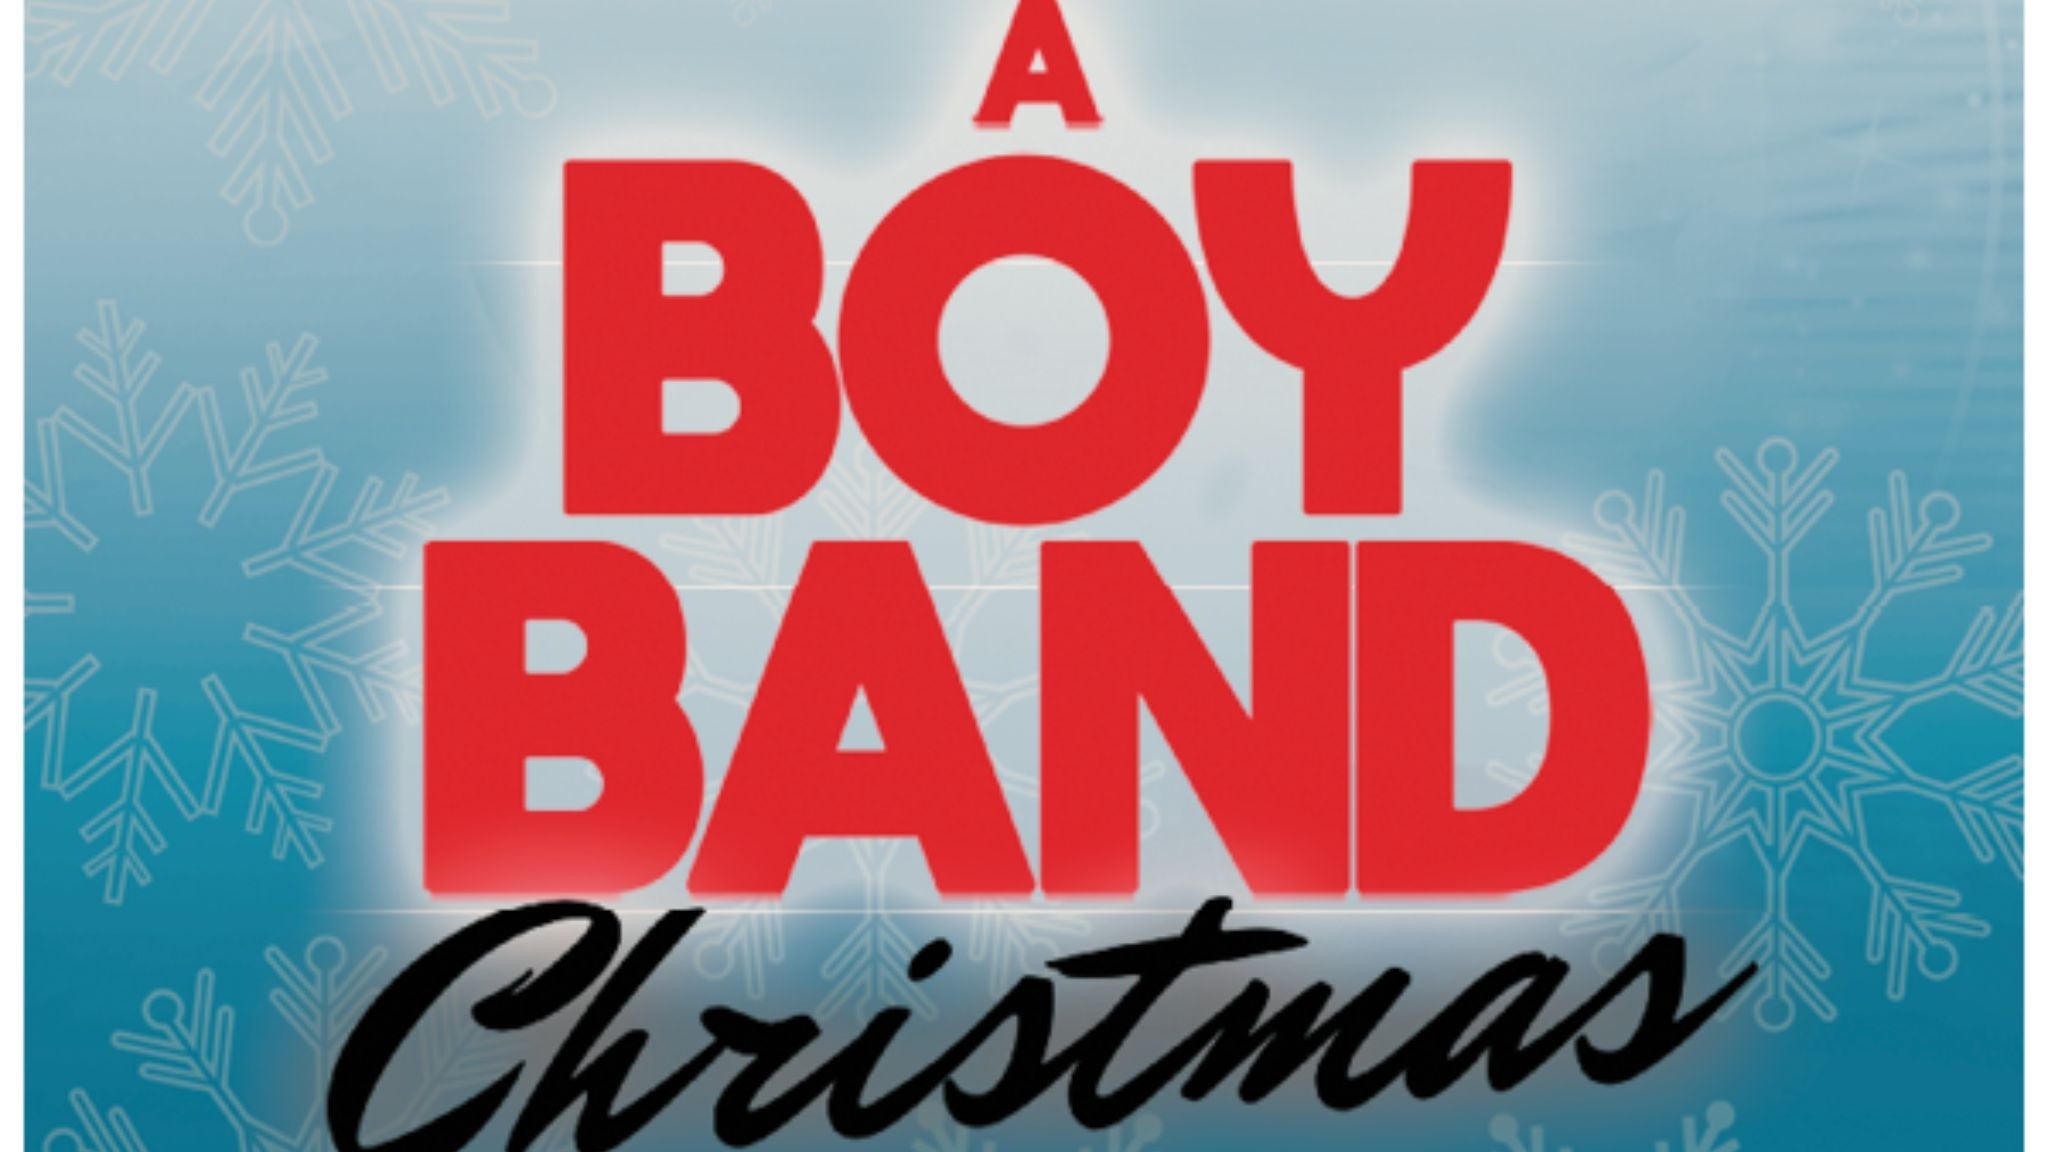 A Boy Band Christmas - Charles Town, WV 25414